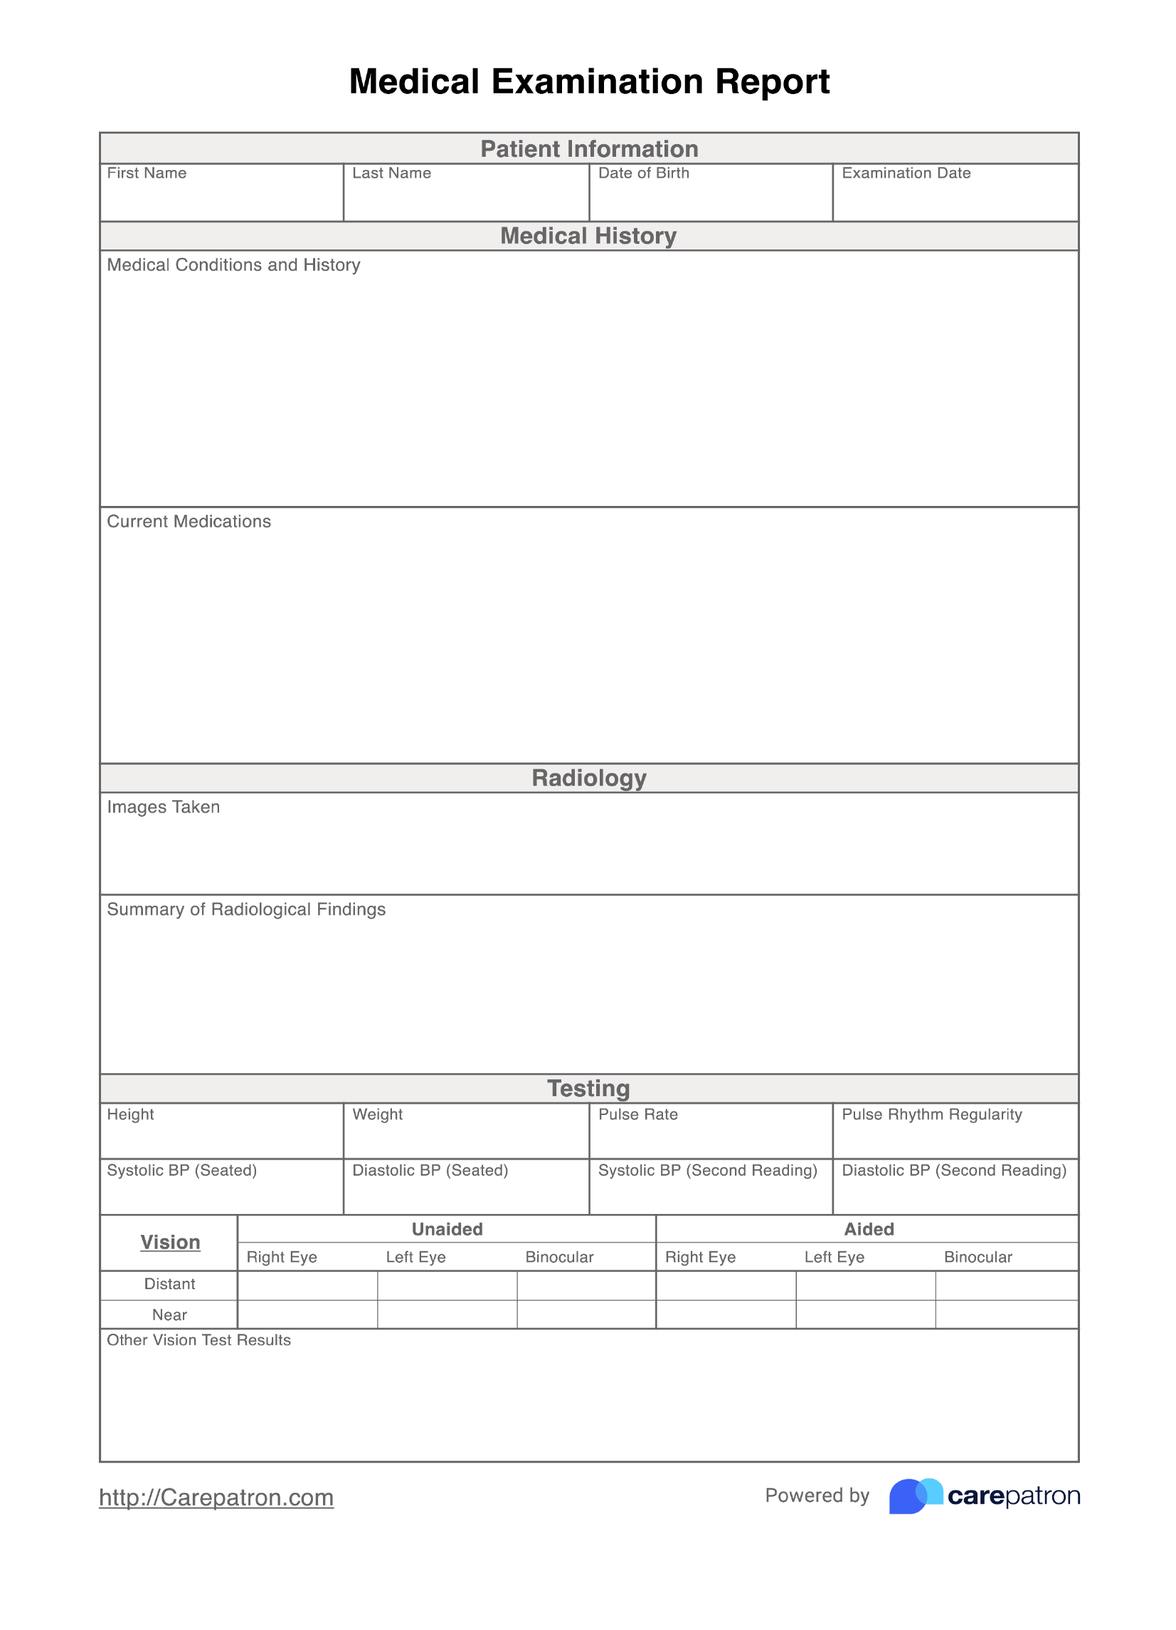 Medical Examination Report (MER) PDF Example